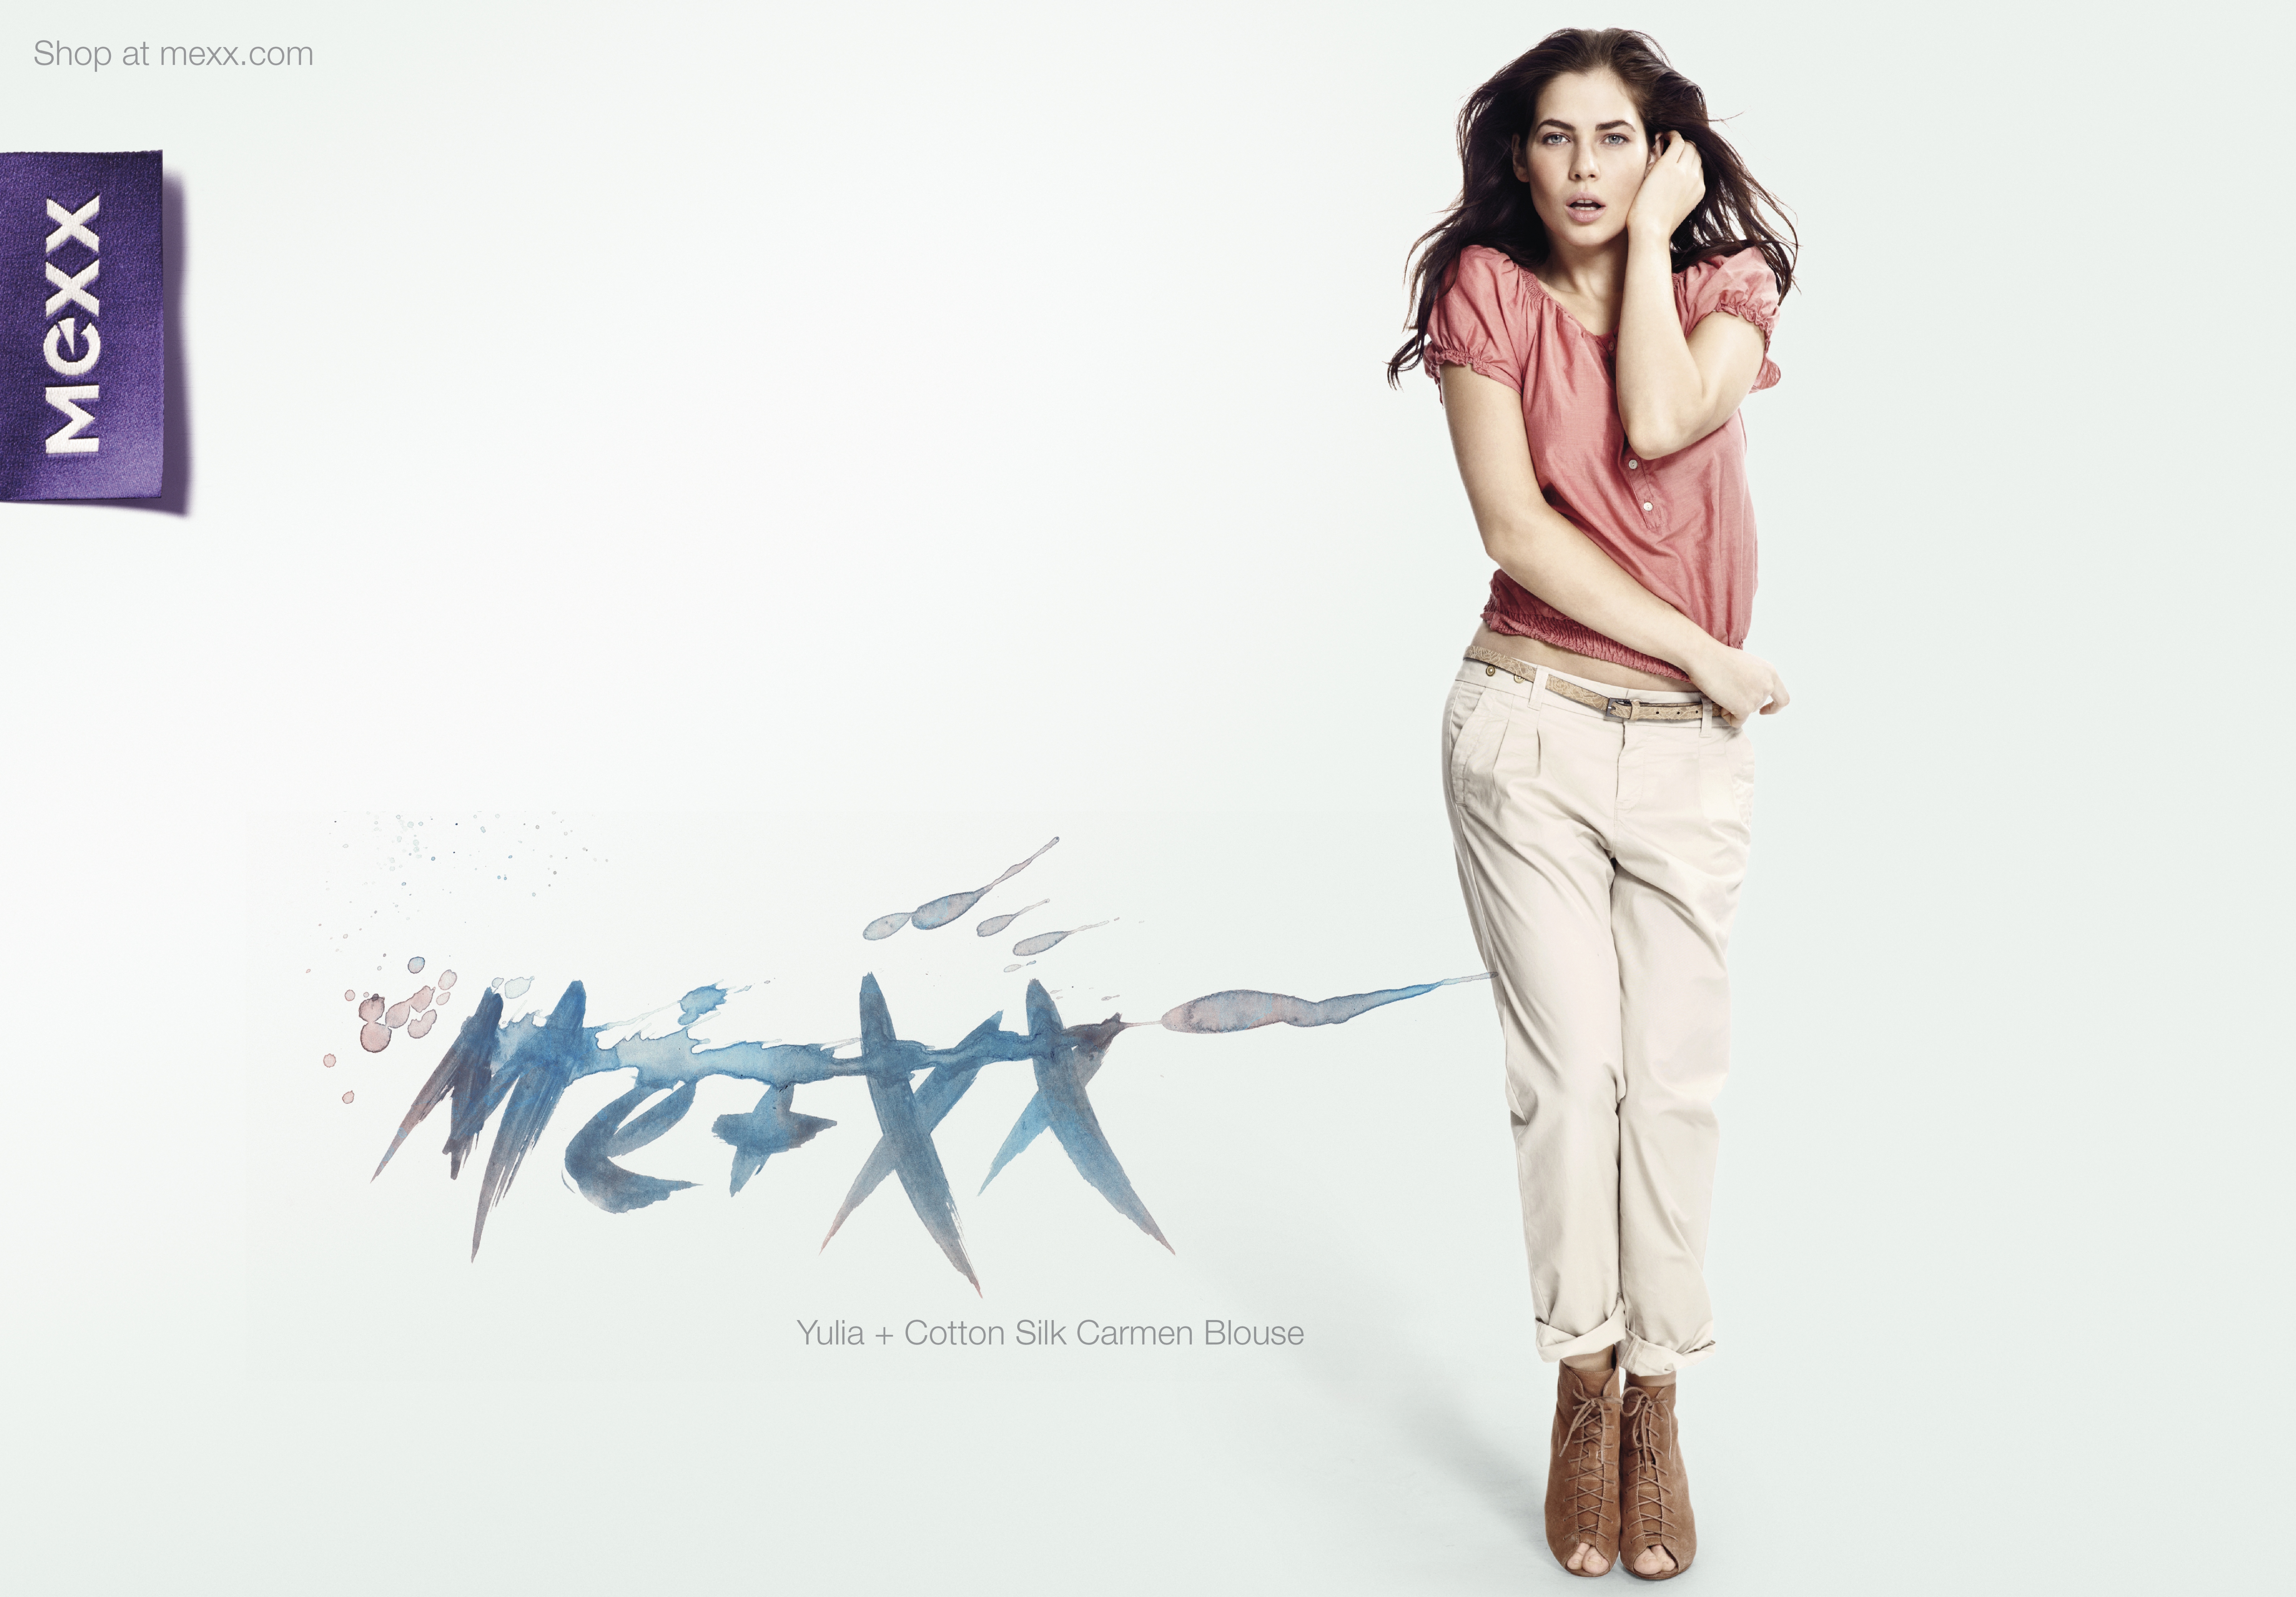 Mexx Me XX SS 2011 Campaign 4